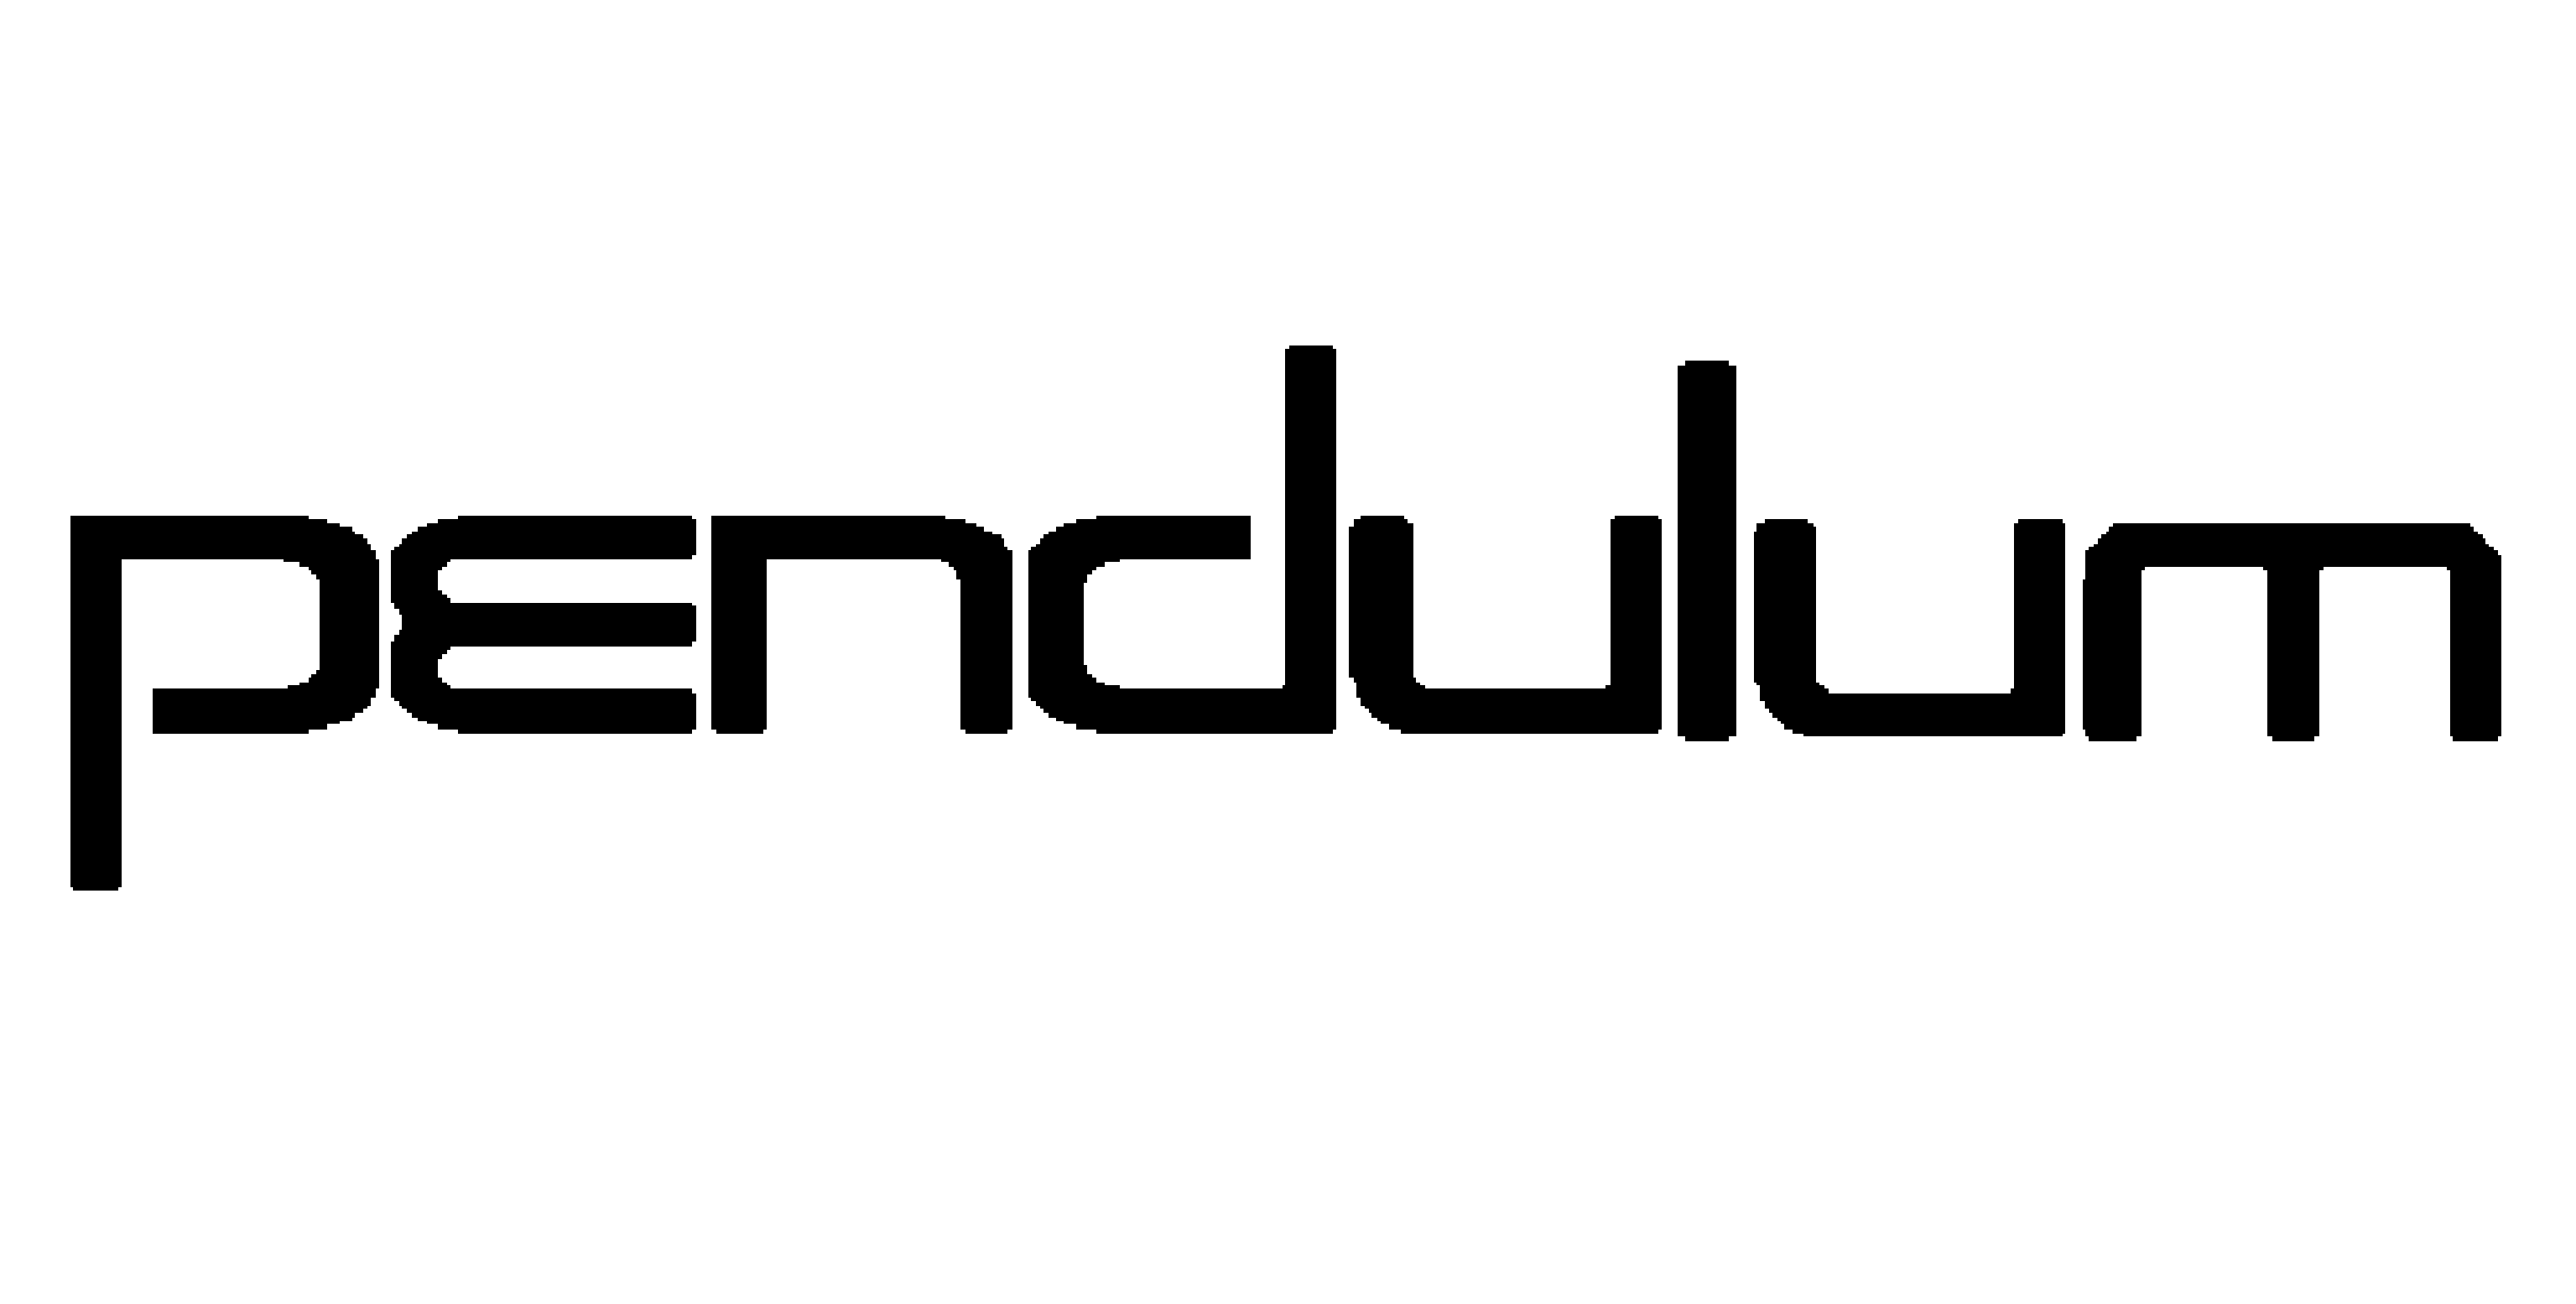 Old MS Logo - Old Pendulum logo remake in MS Paint. : Pendulum